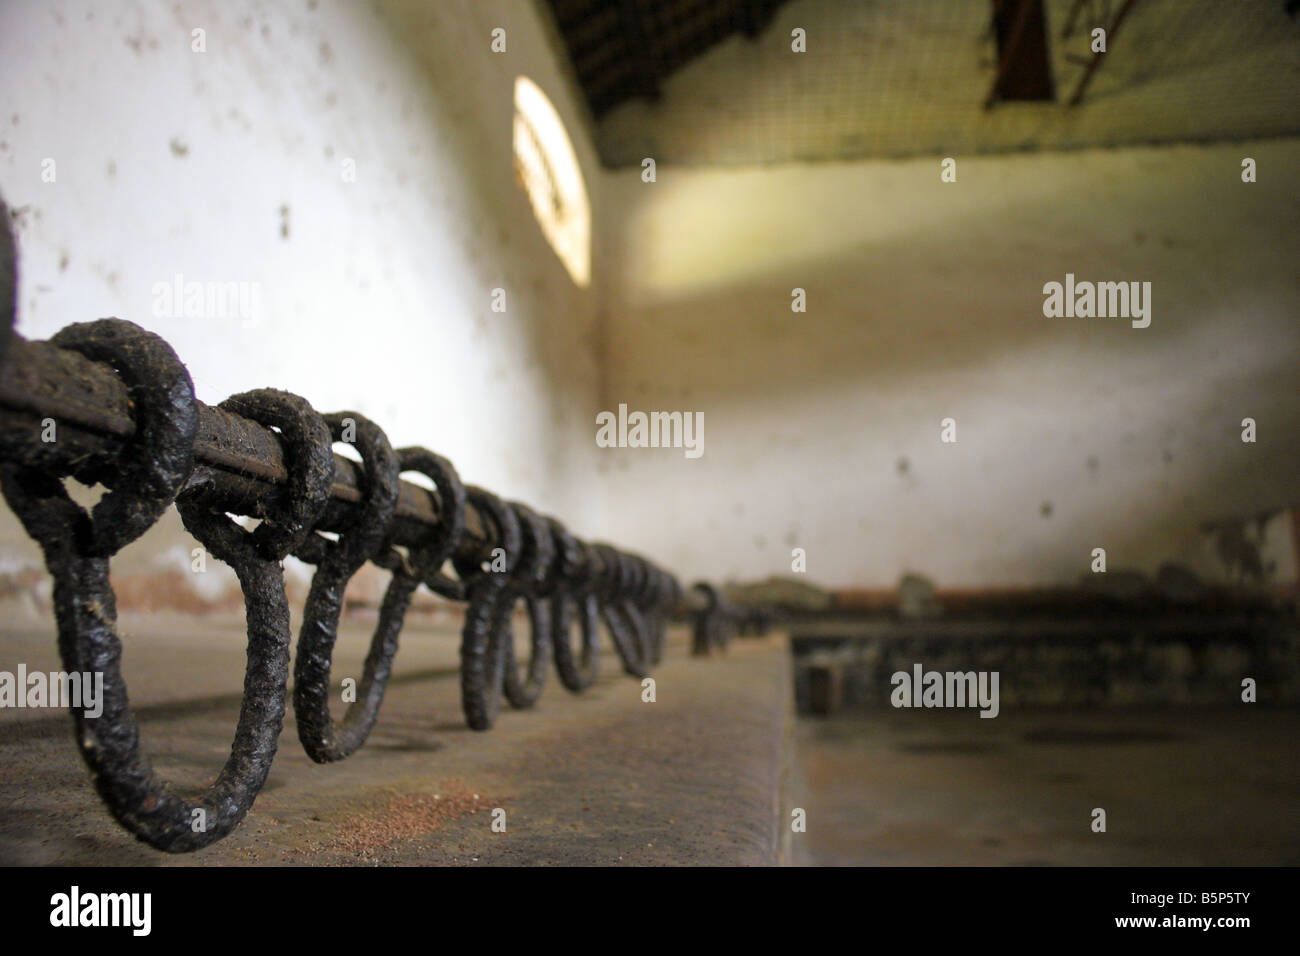 inside a death room in poulo condor's convict prison, french indochina colony Stock Photo